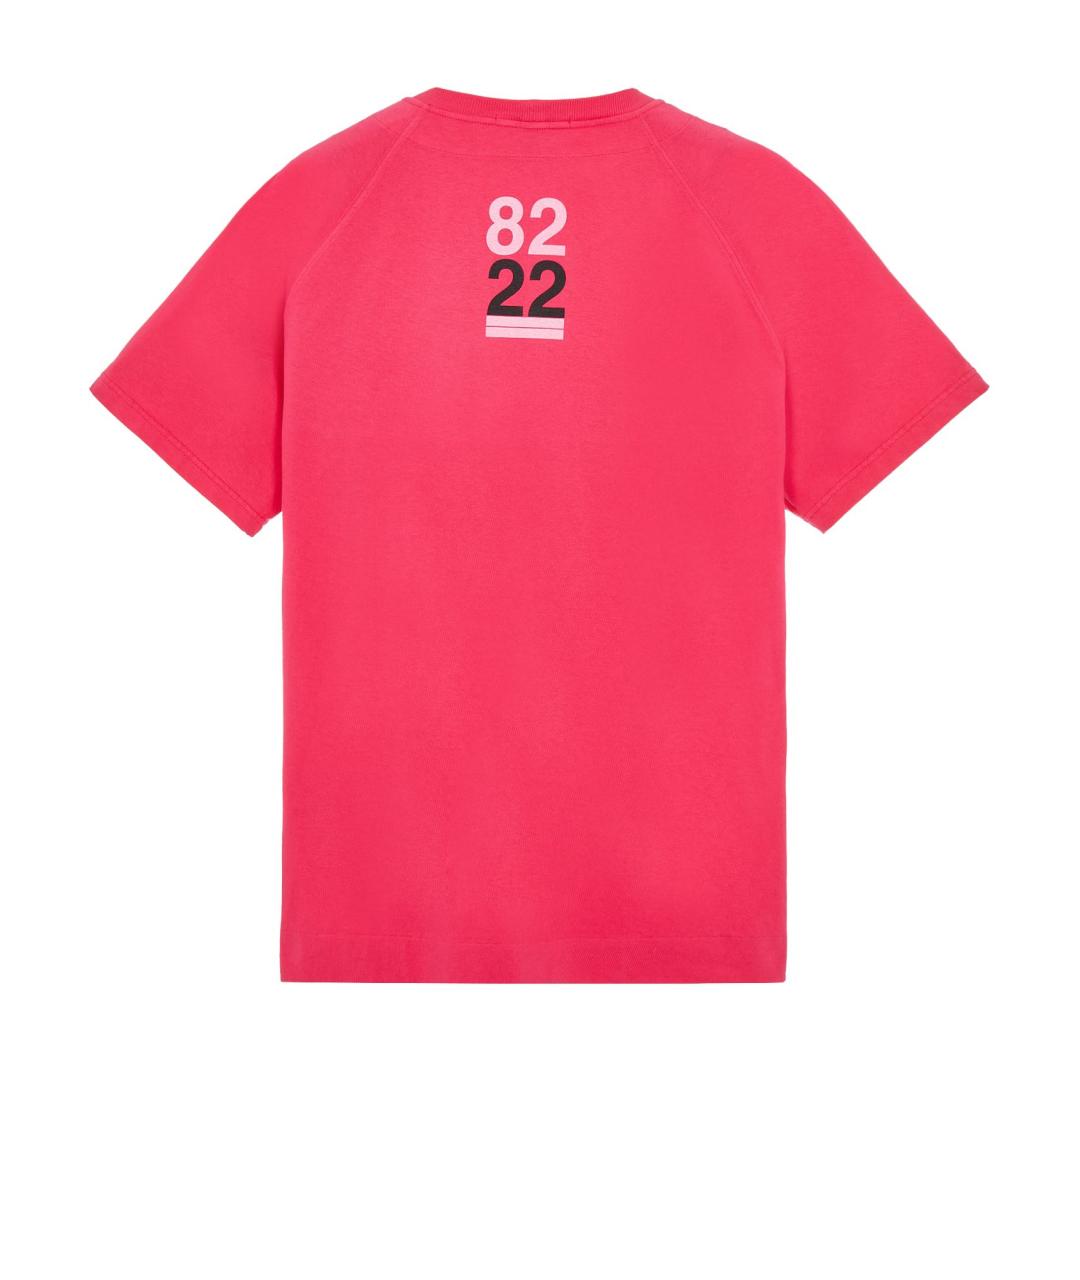 STONE ISLAND Розовая хлопковая футболка, фото 2